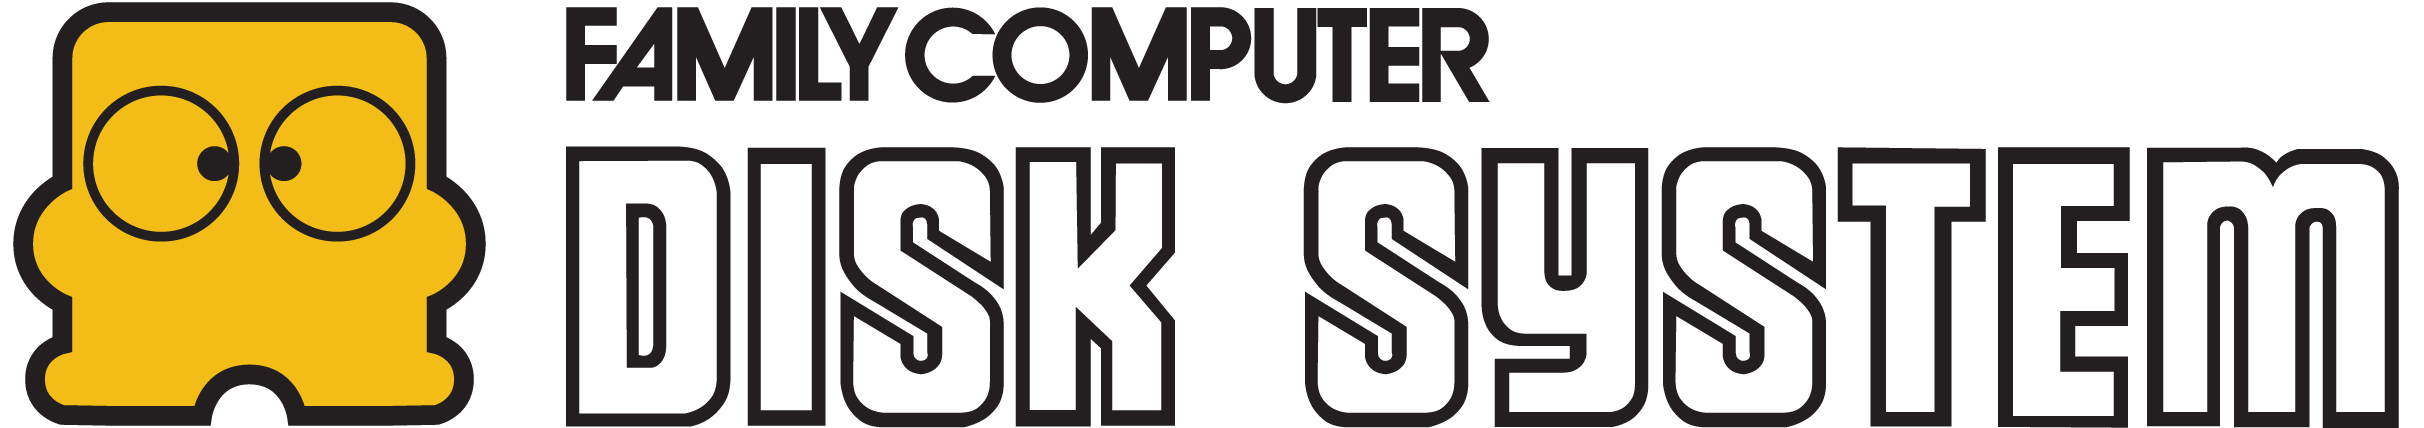 NintendoFamicomDiskSystem logo.jpg